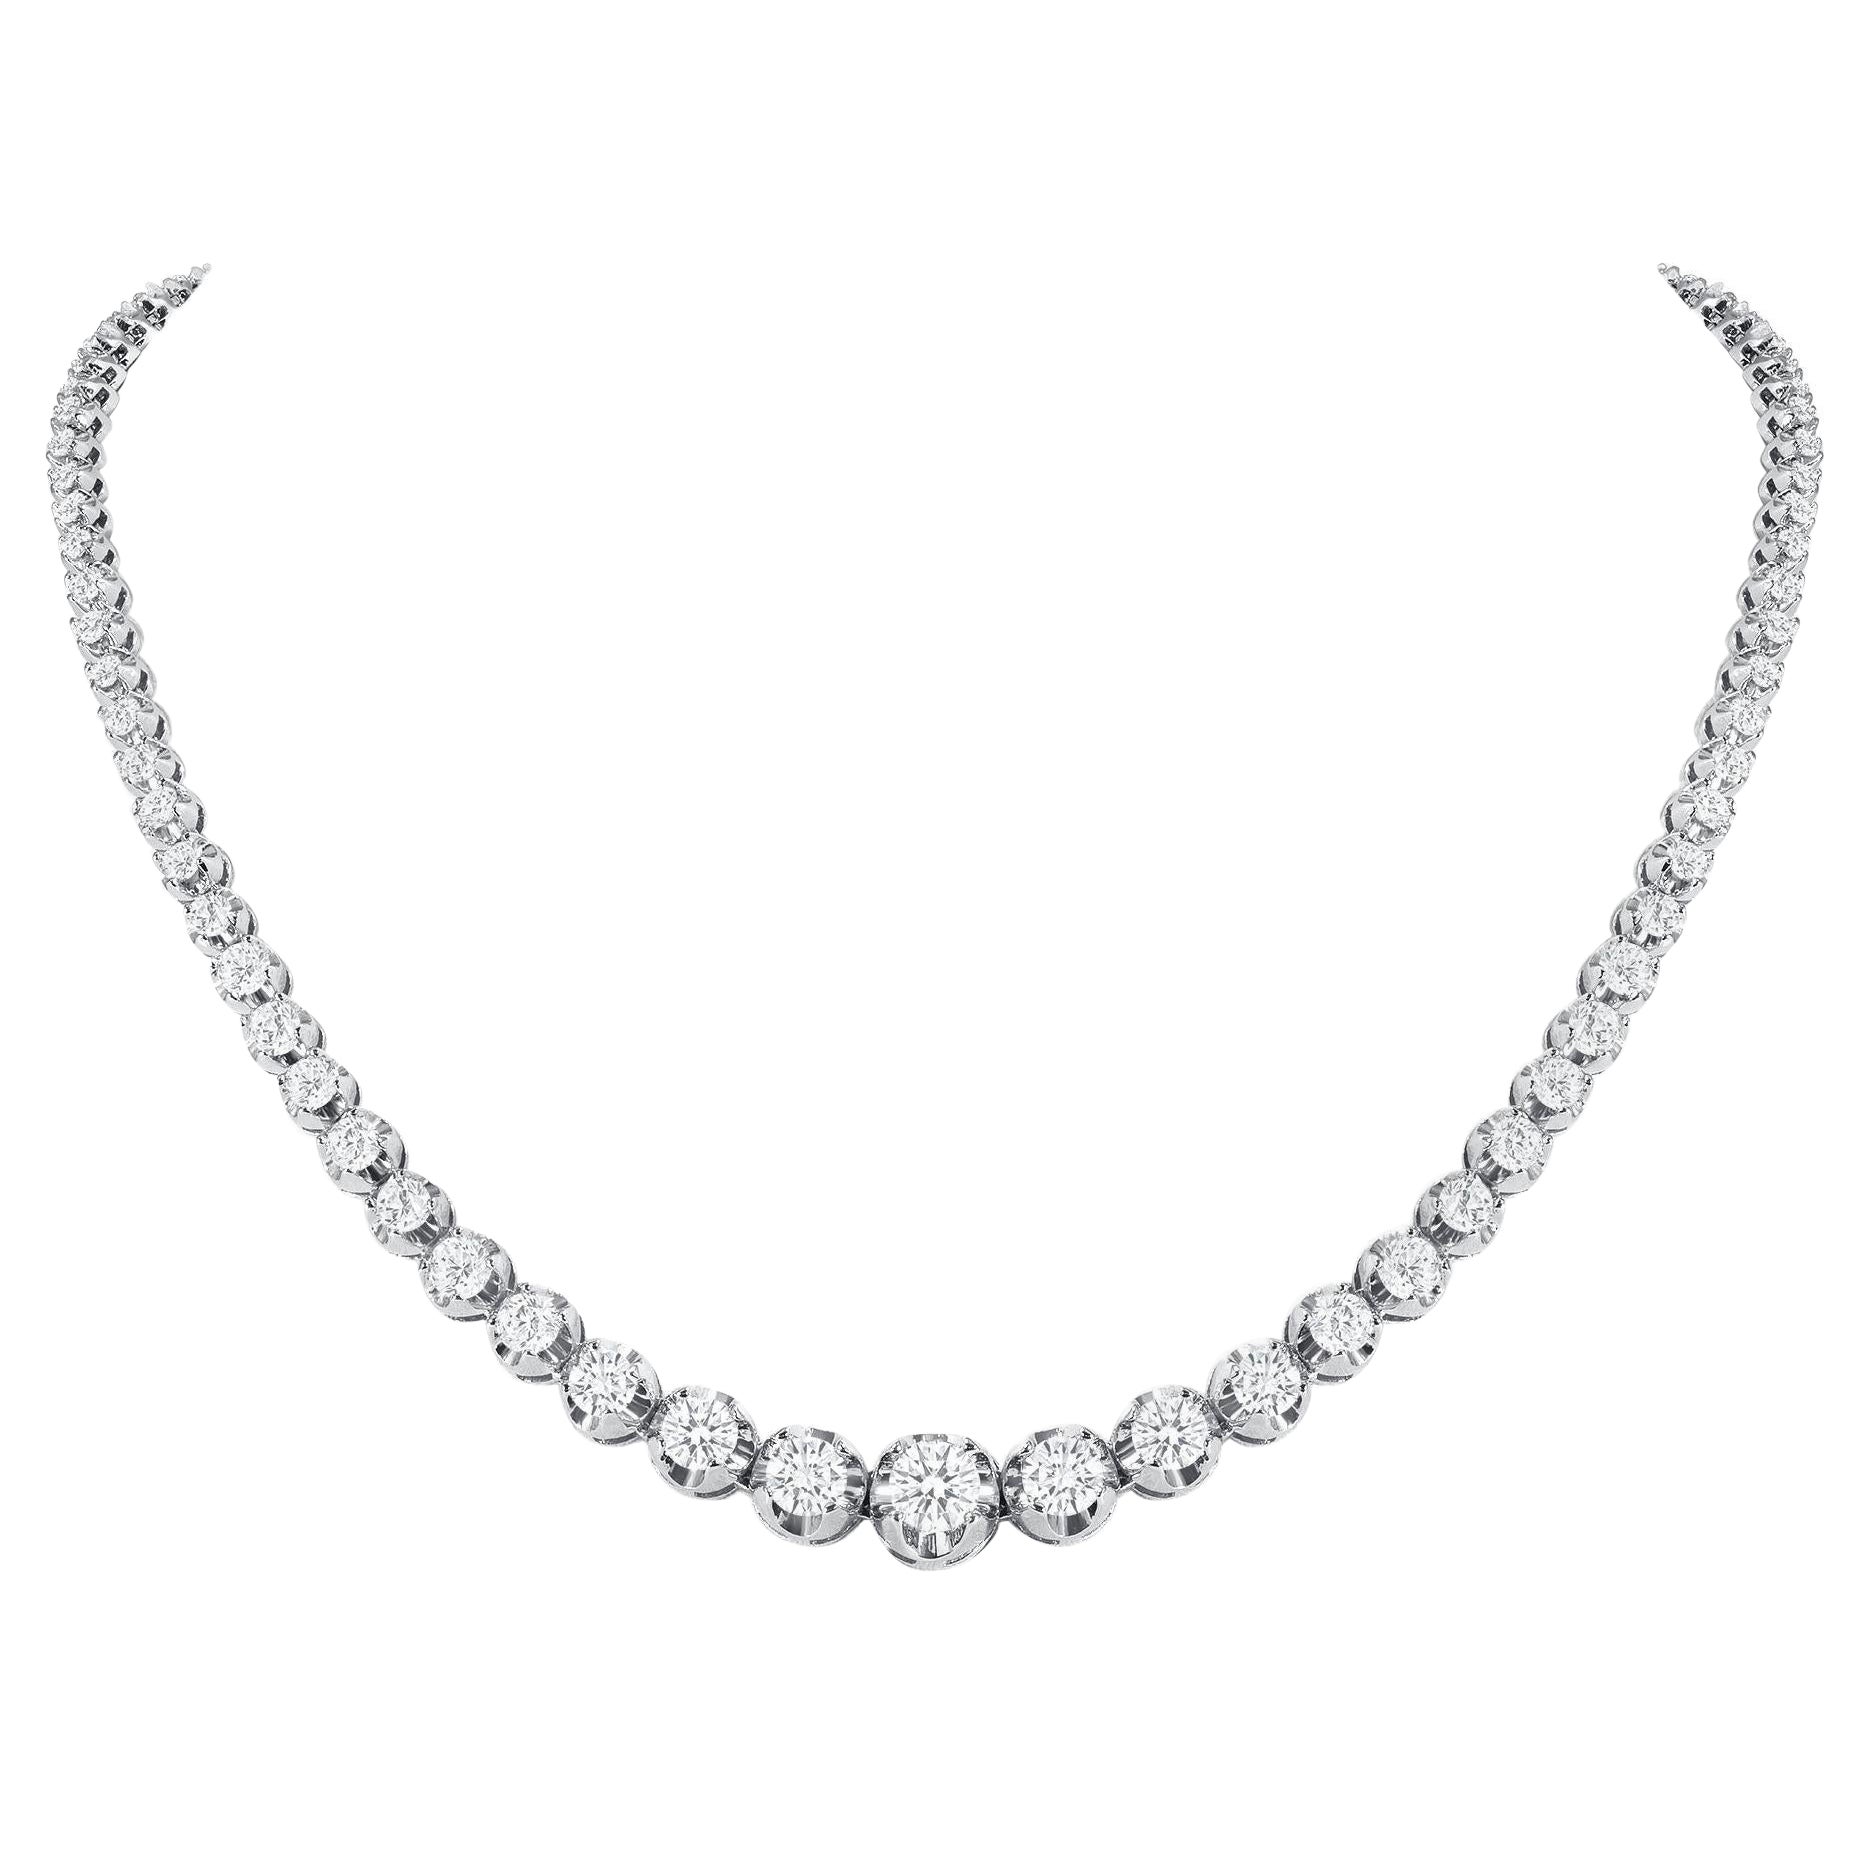 14k White Gold 10Carat Graduated Diamond Tennis Necklace Illusion Setting For Sale